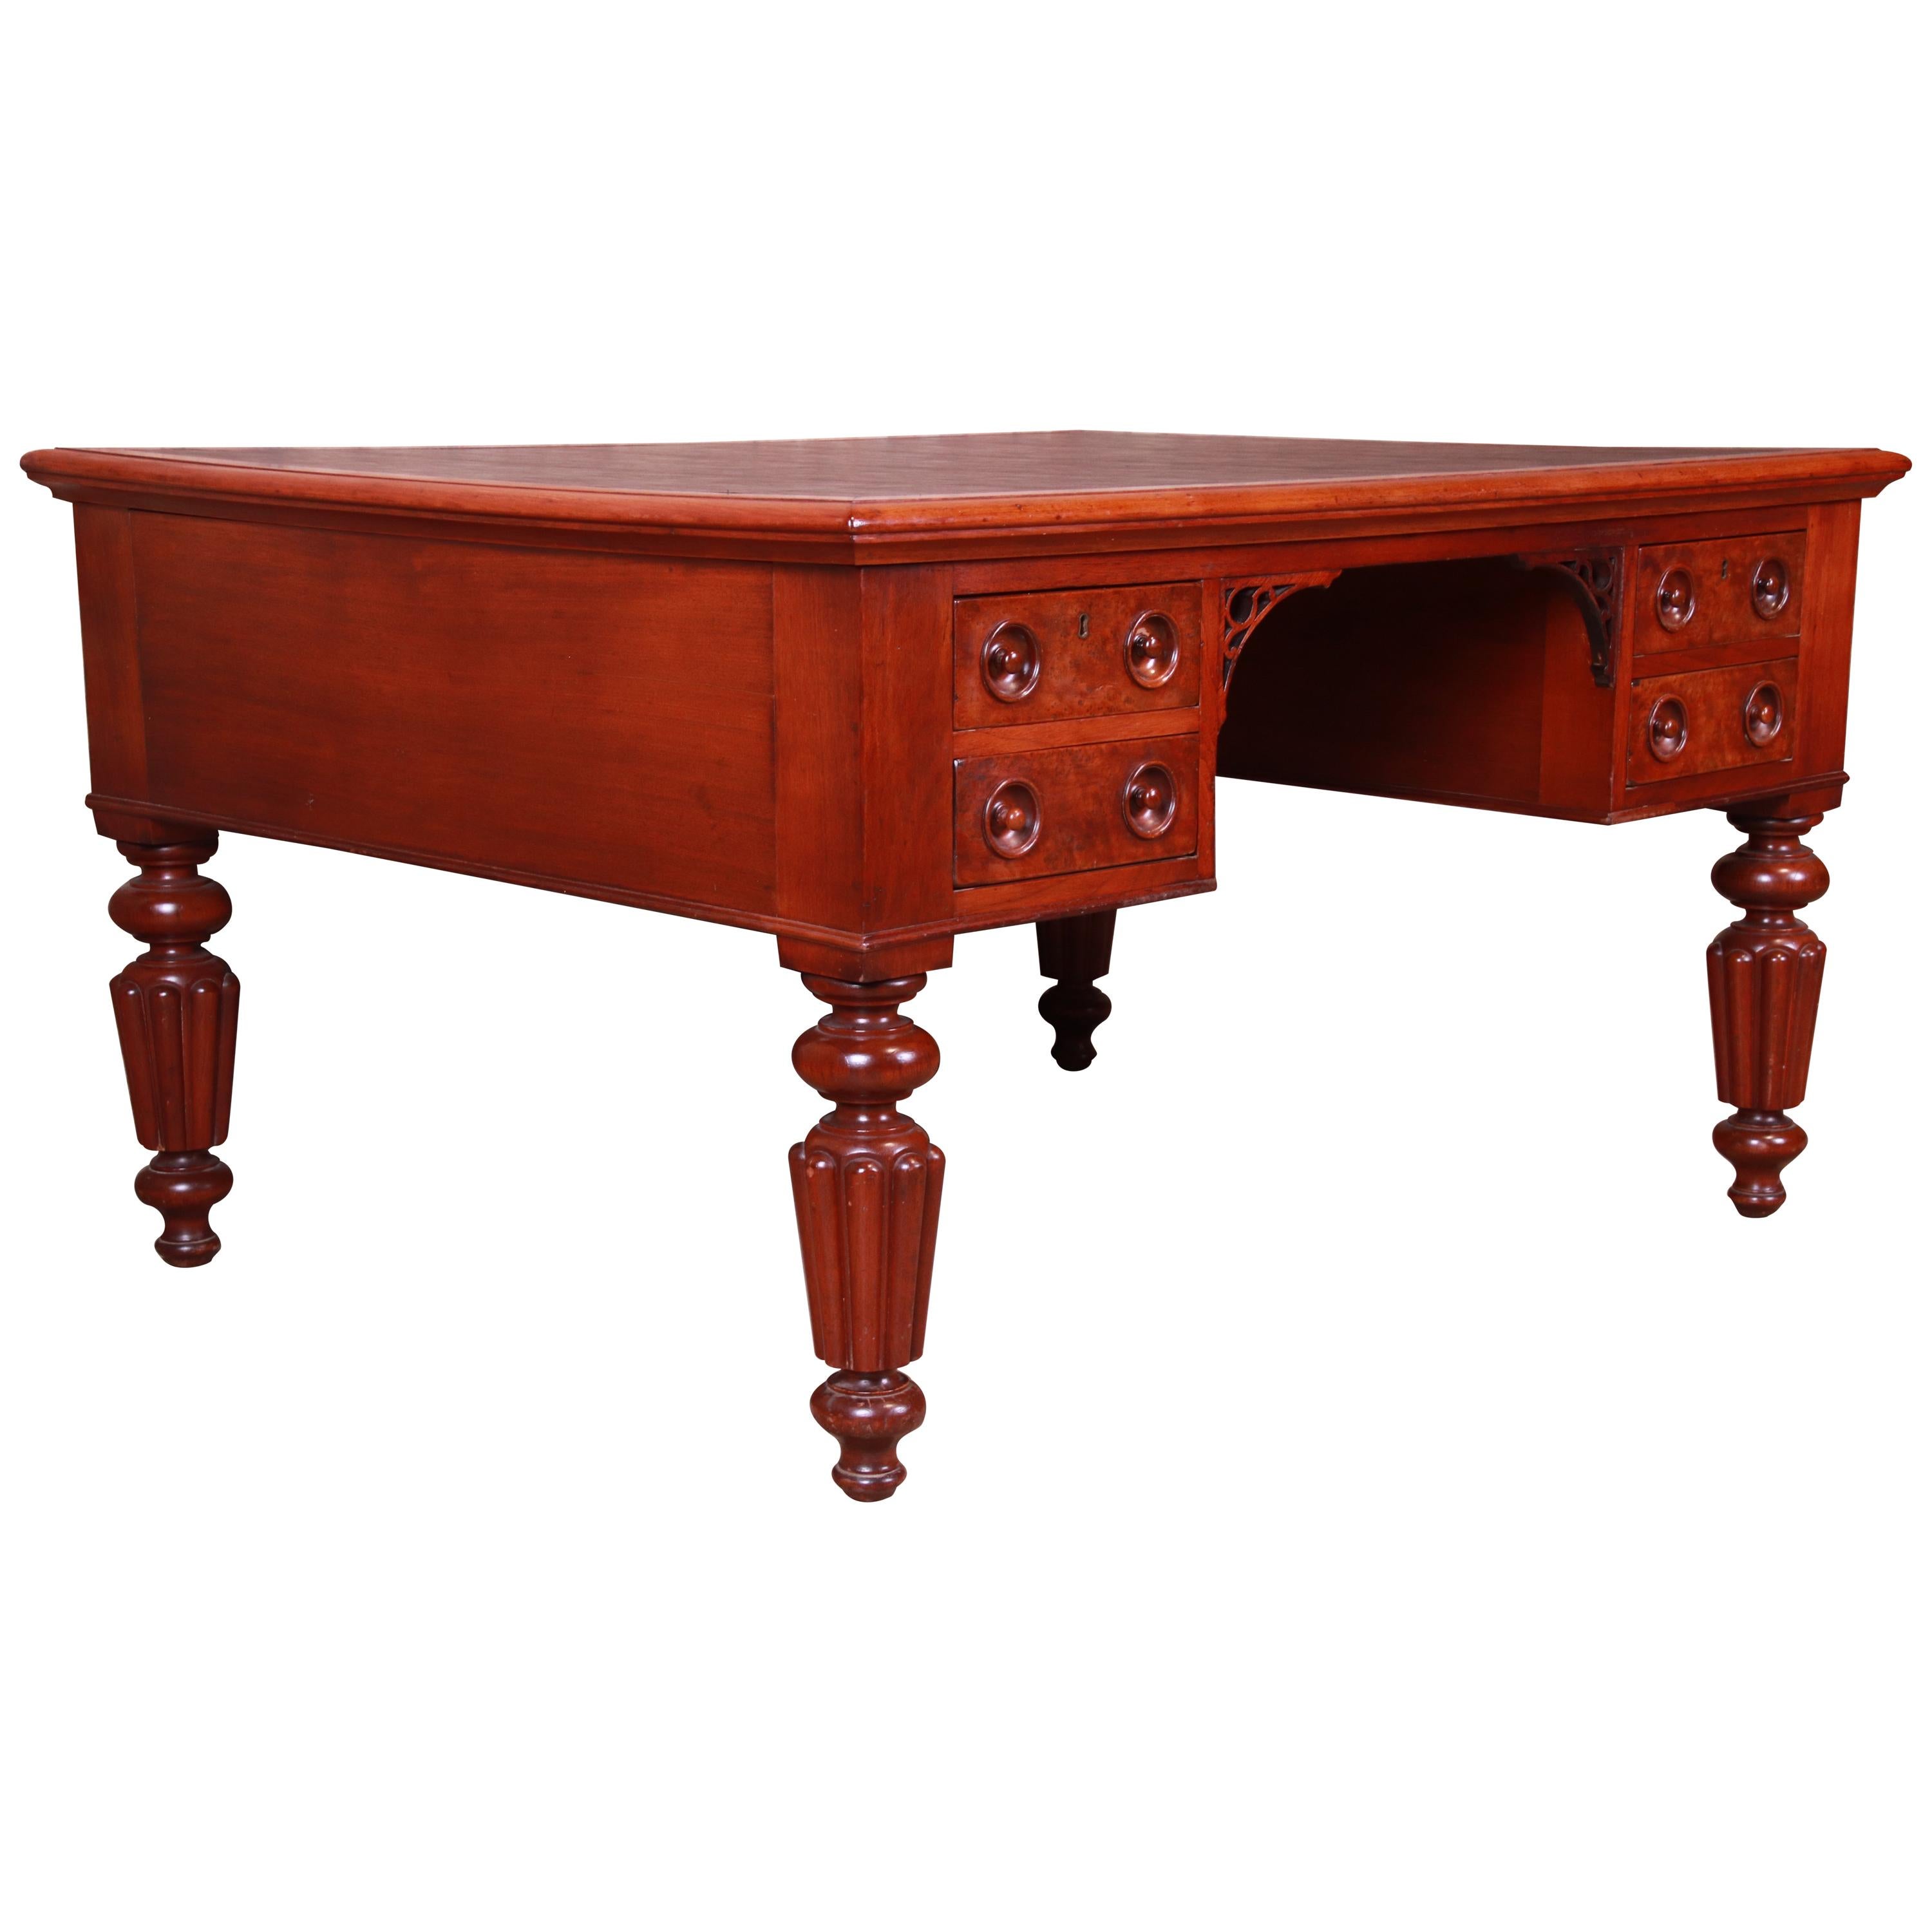 Antique English Mahogany and Burl Executive Leather Top Partner Desk, circa 1850